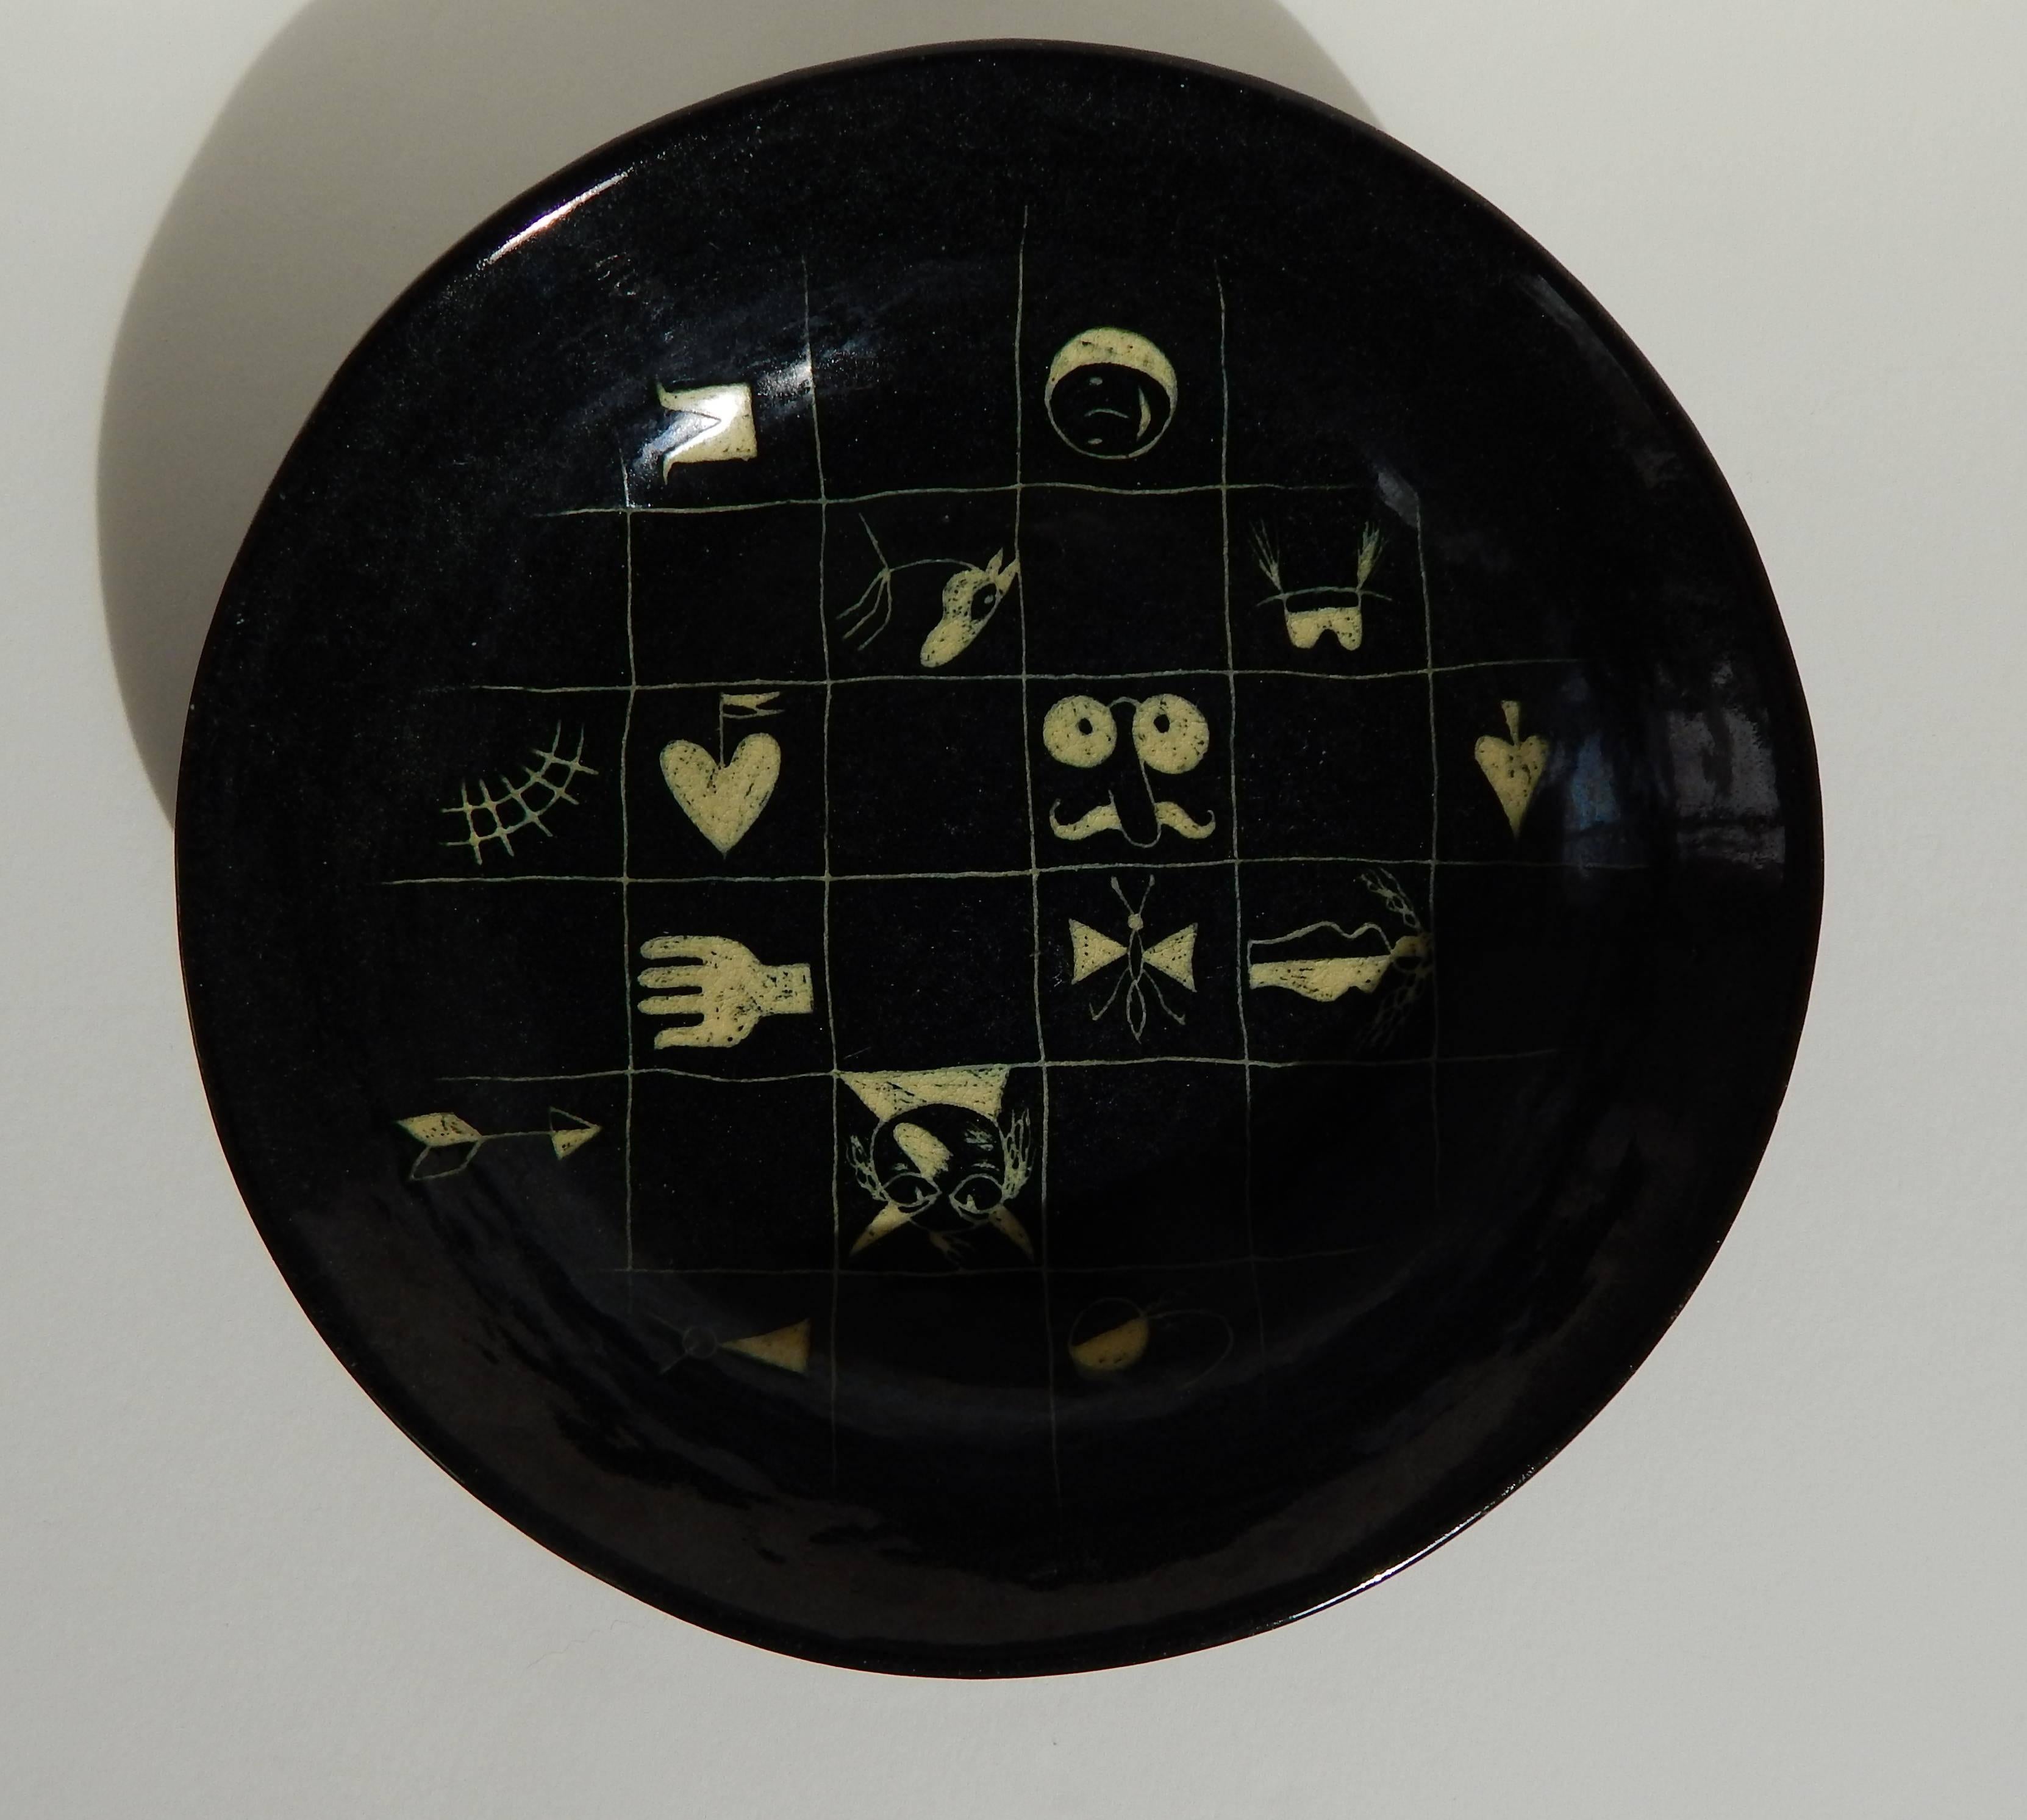 Mid-Century Modern Franz Bergmann Surrealist Studio Ceramic Plate, “Miscellanea” For Sale